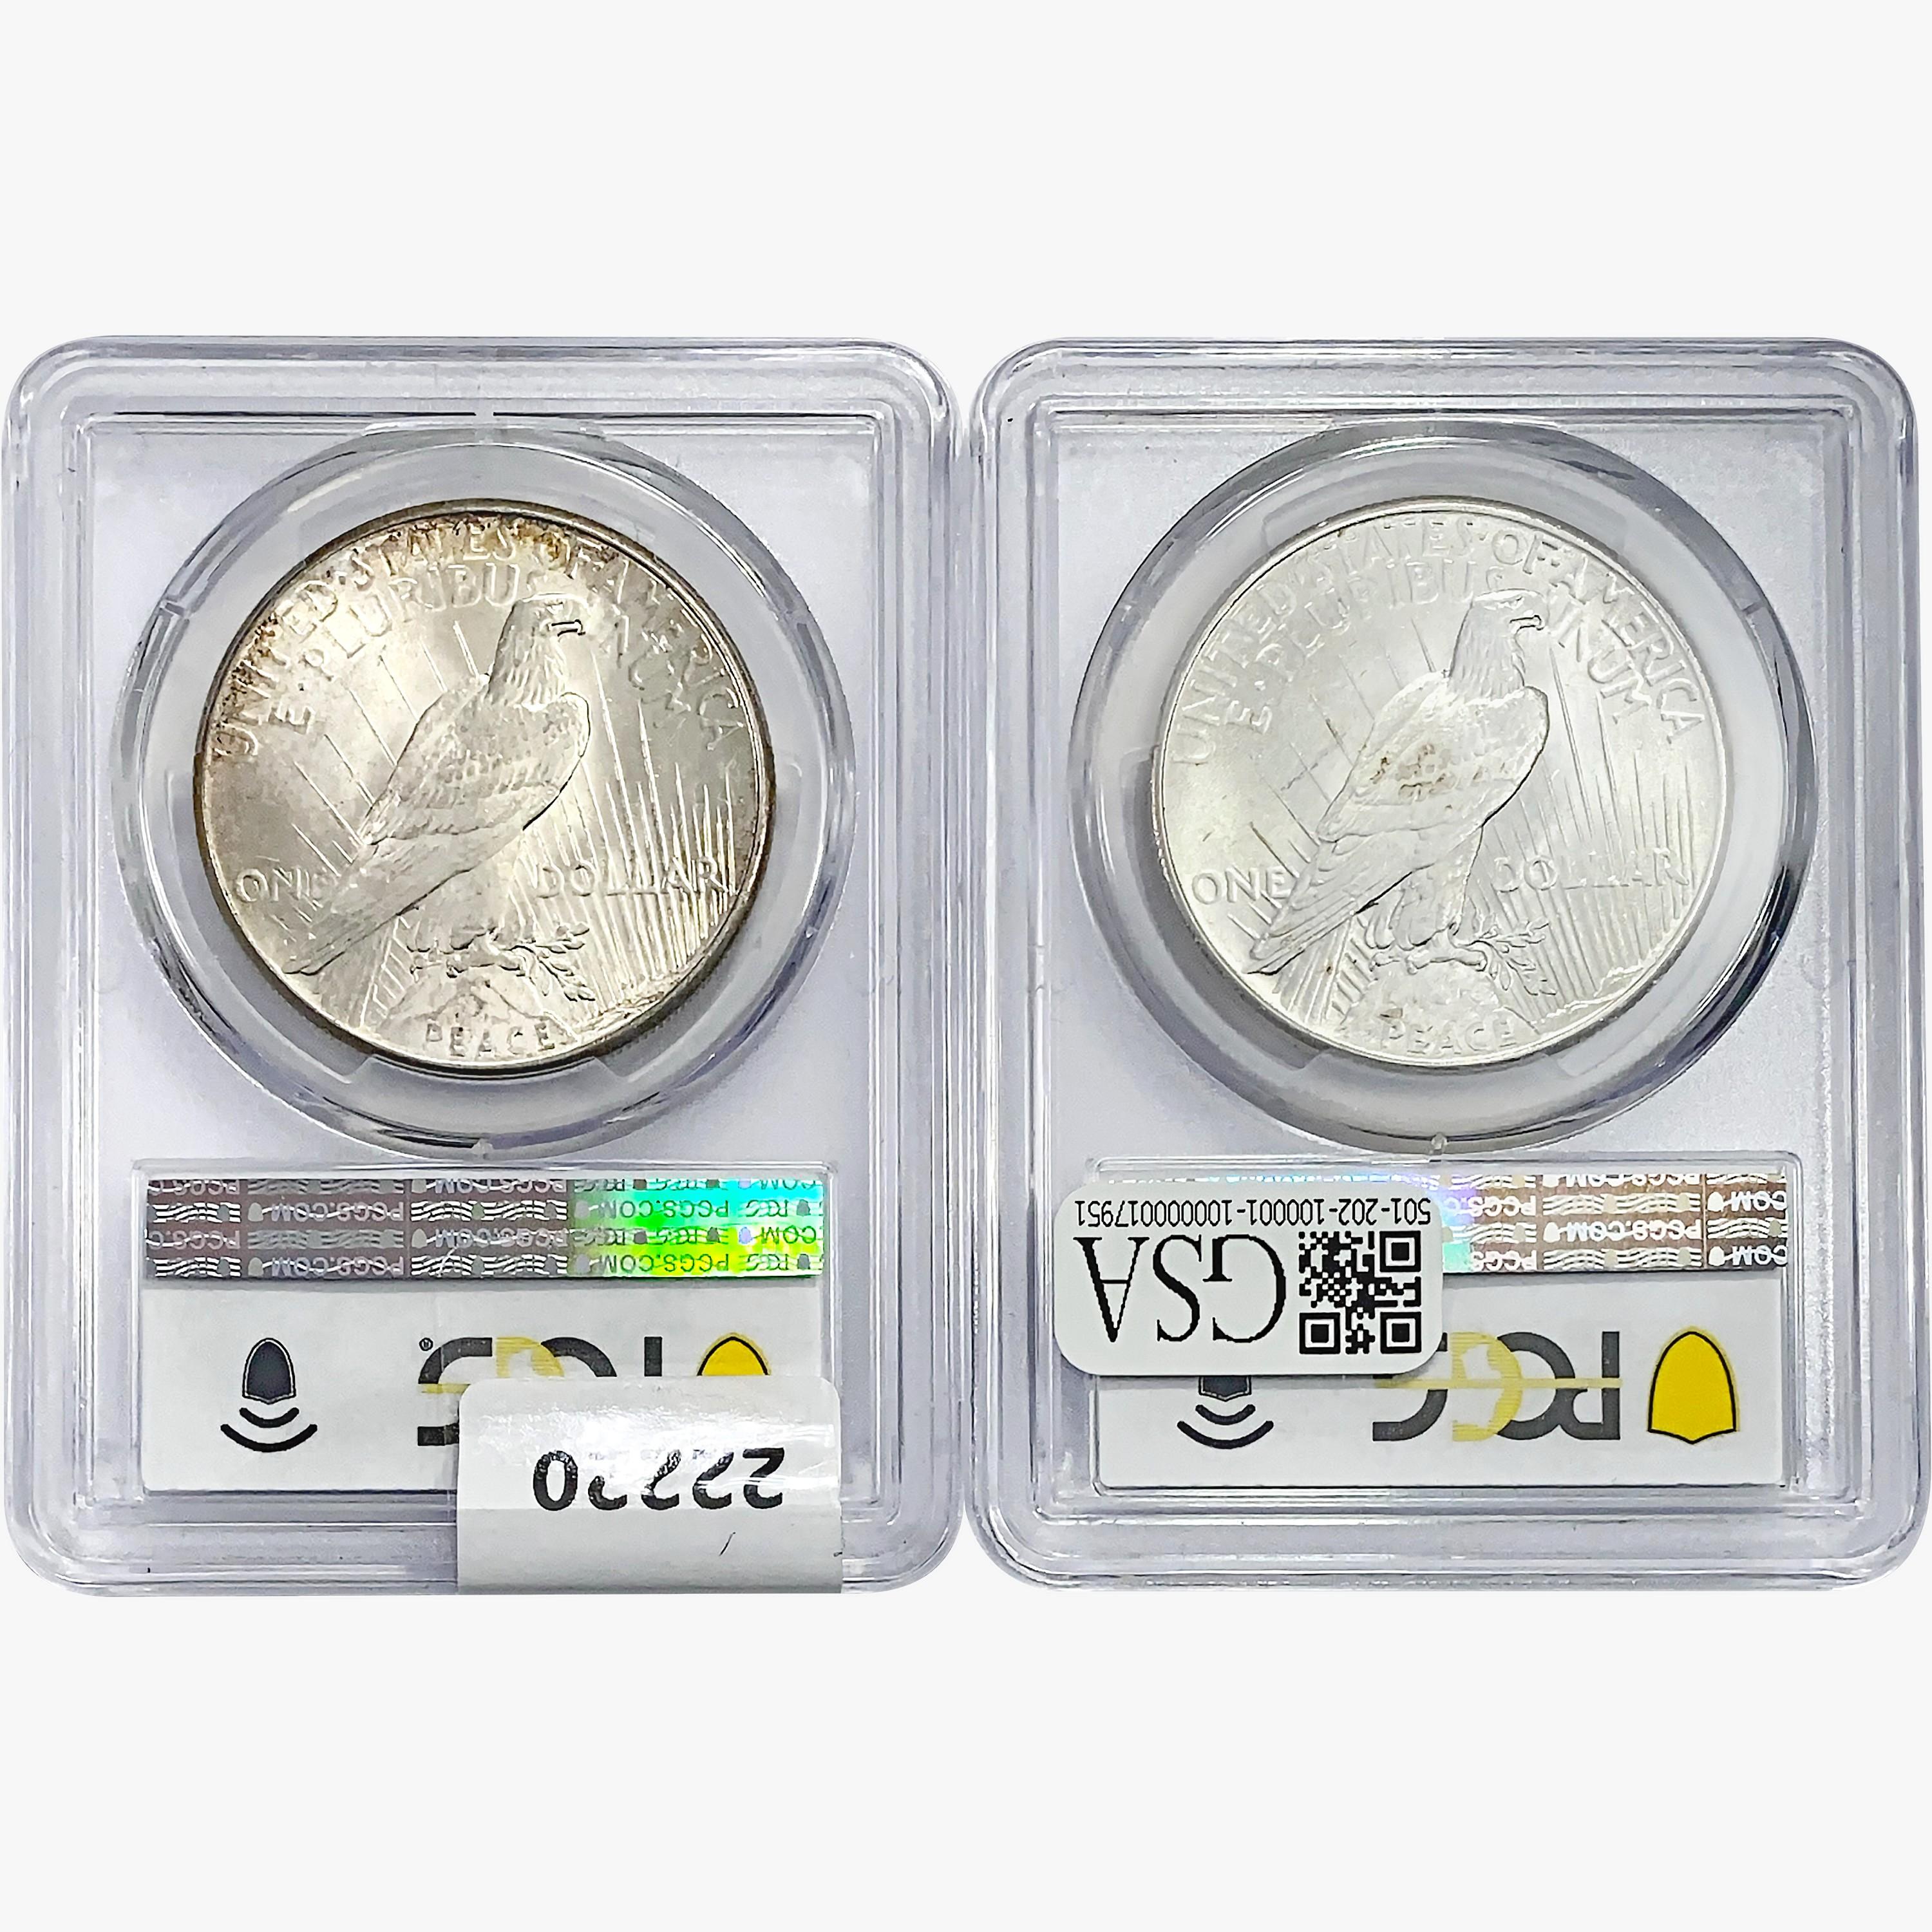 1925 [2] Silver Peace Dollar PCGS MS62